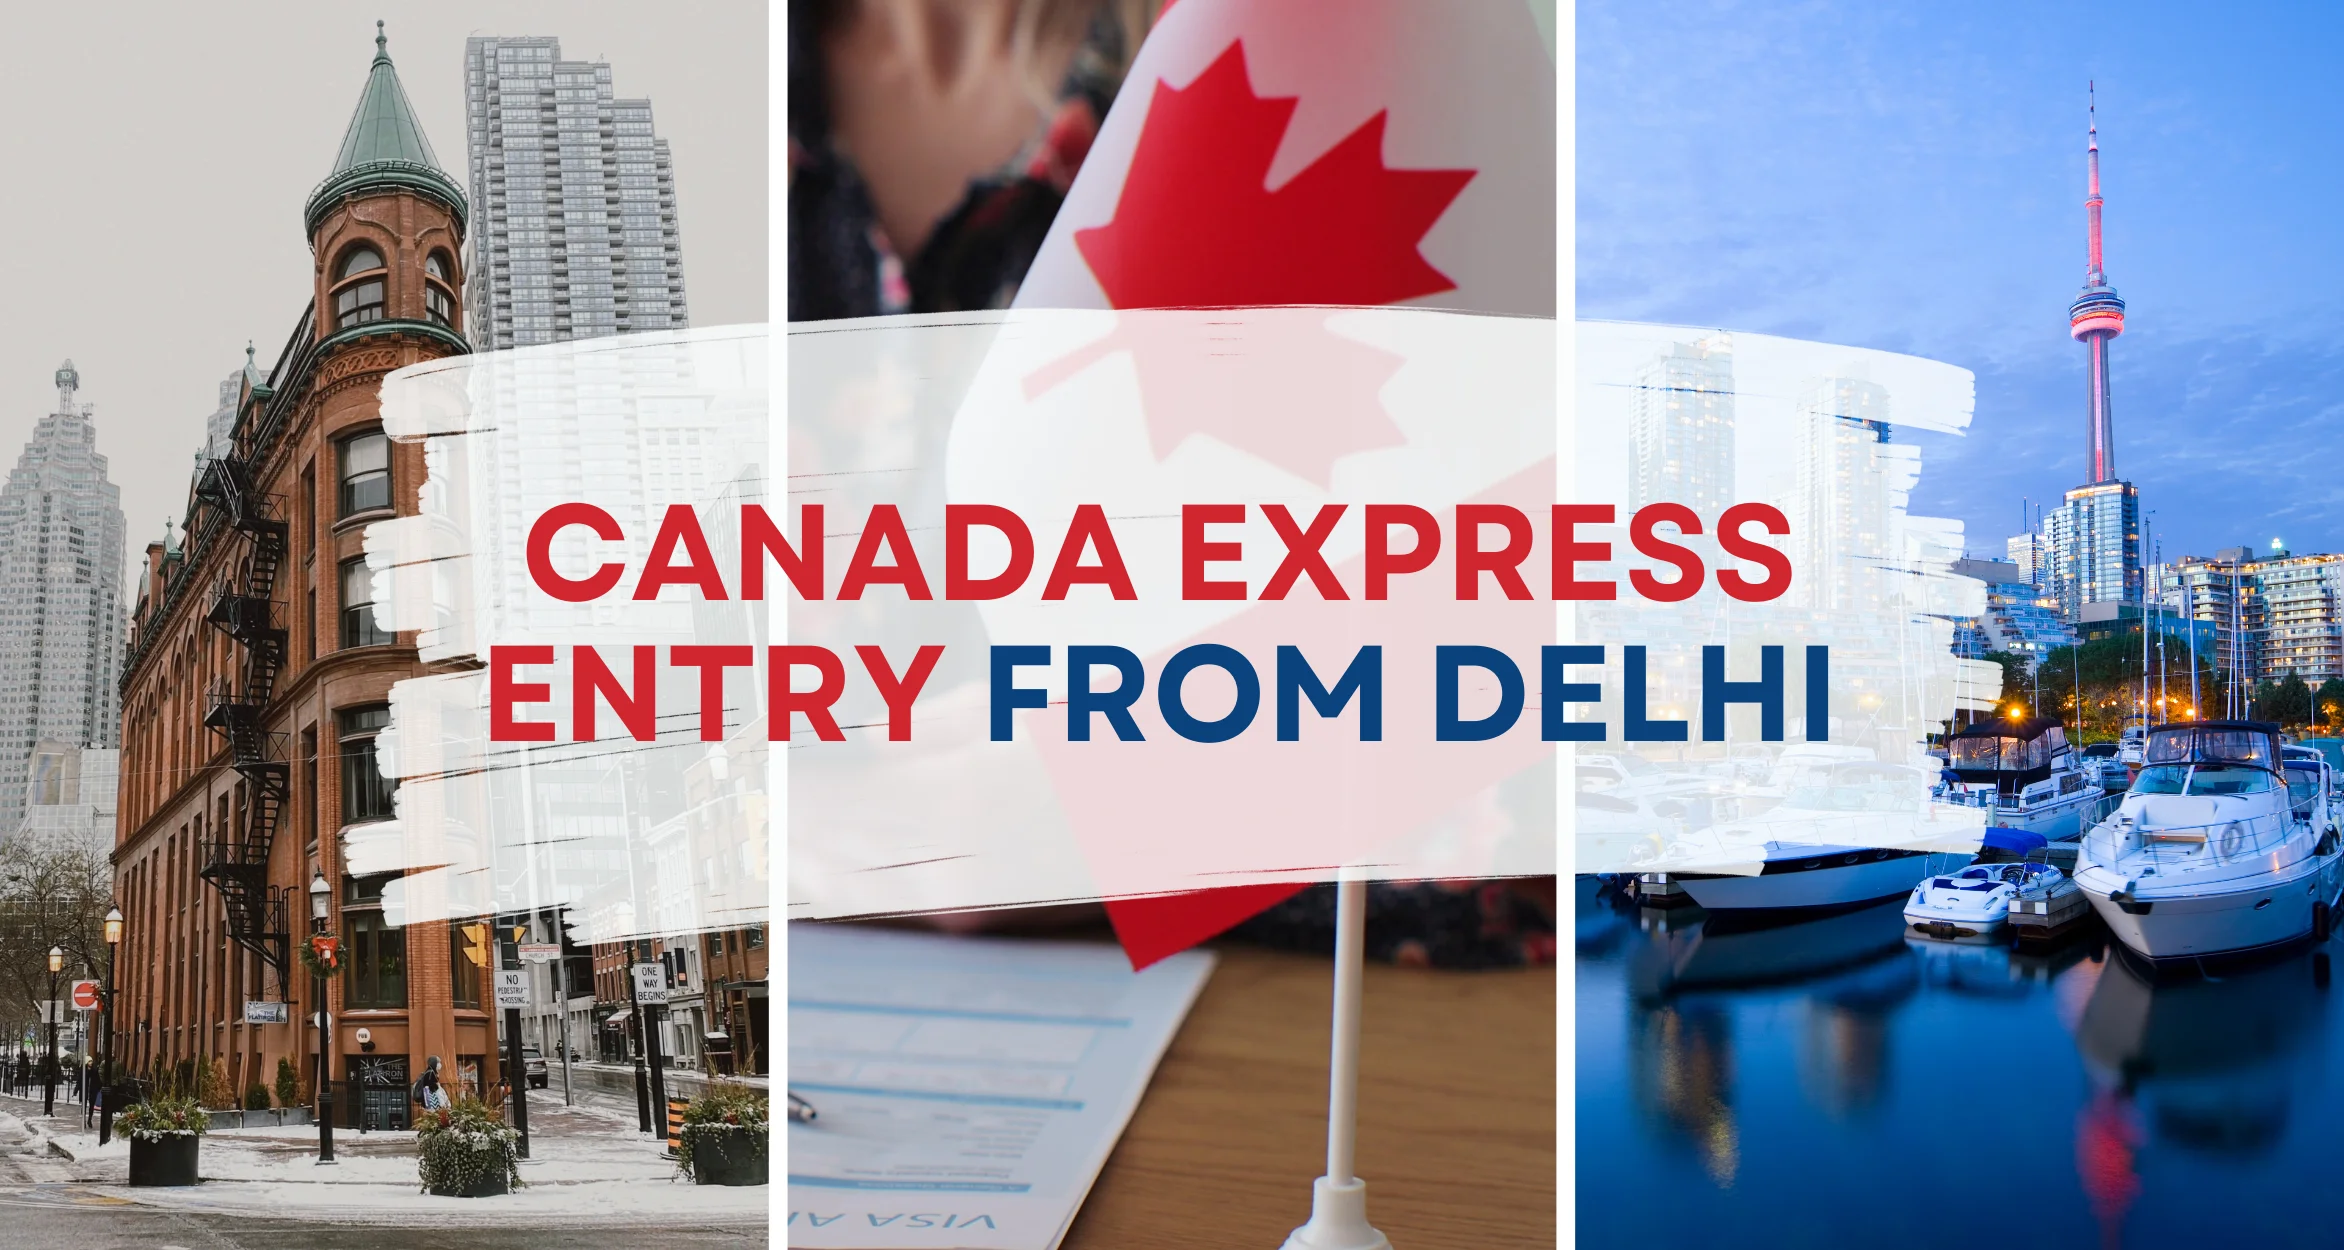 Canada Express entry from Delhi